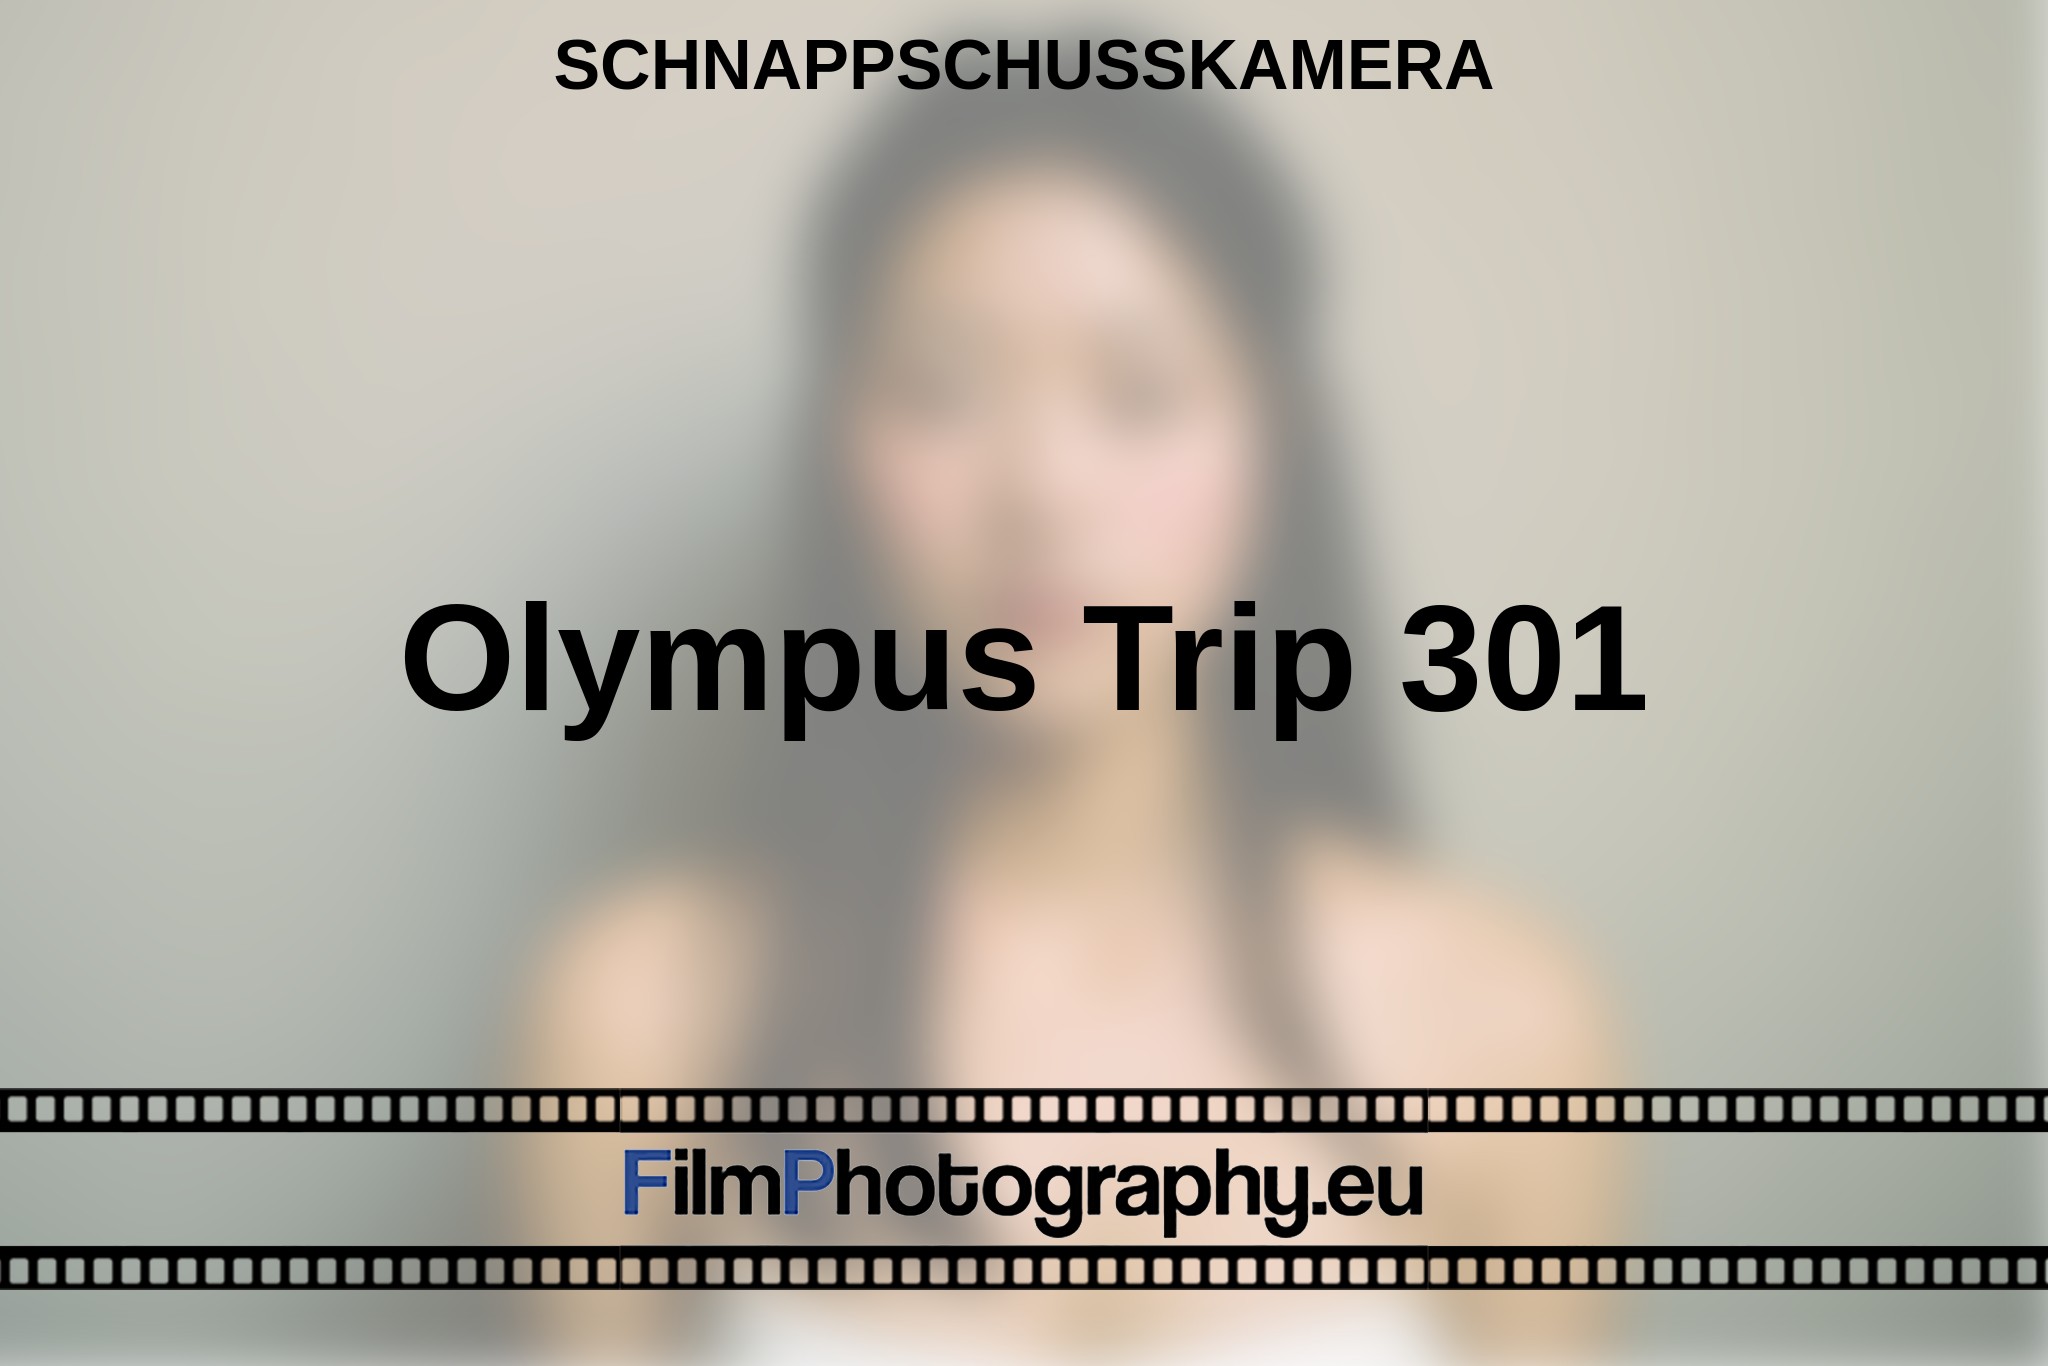 olympus-trip-301-schnappschusskamera-bnv.jpg